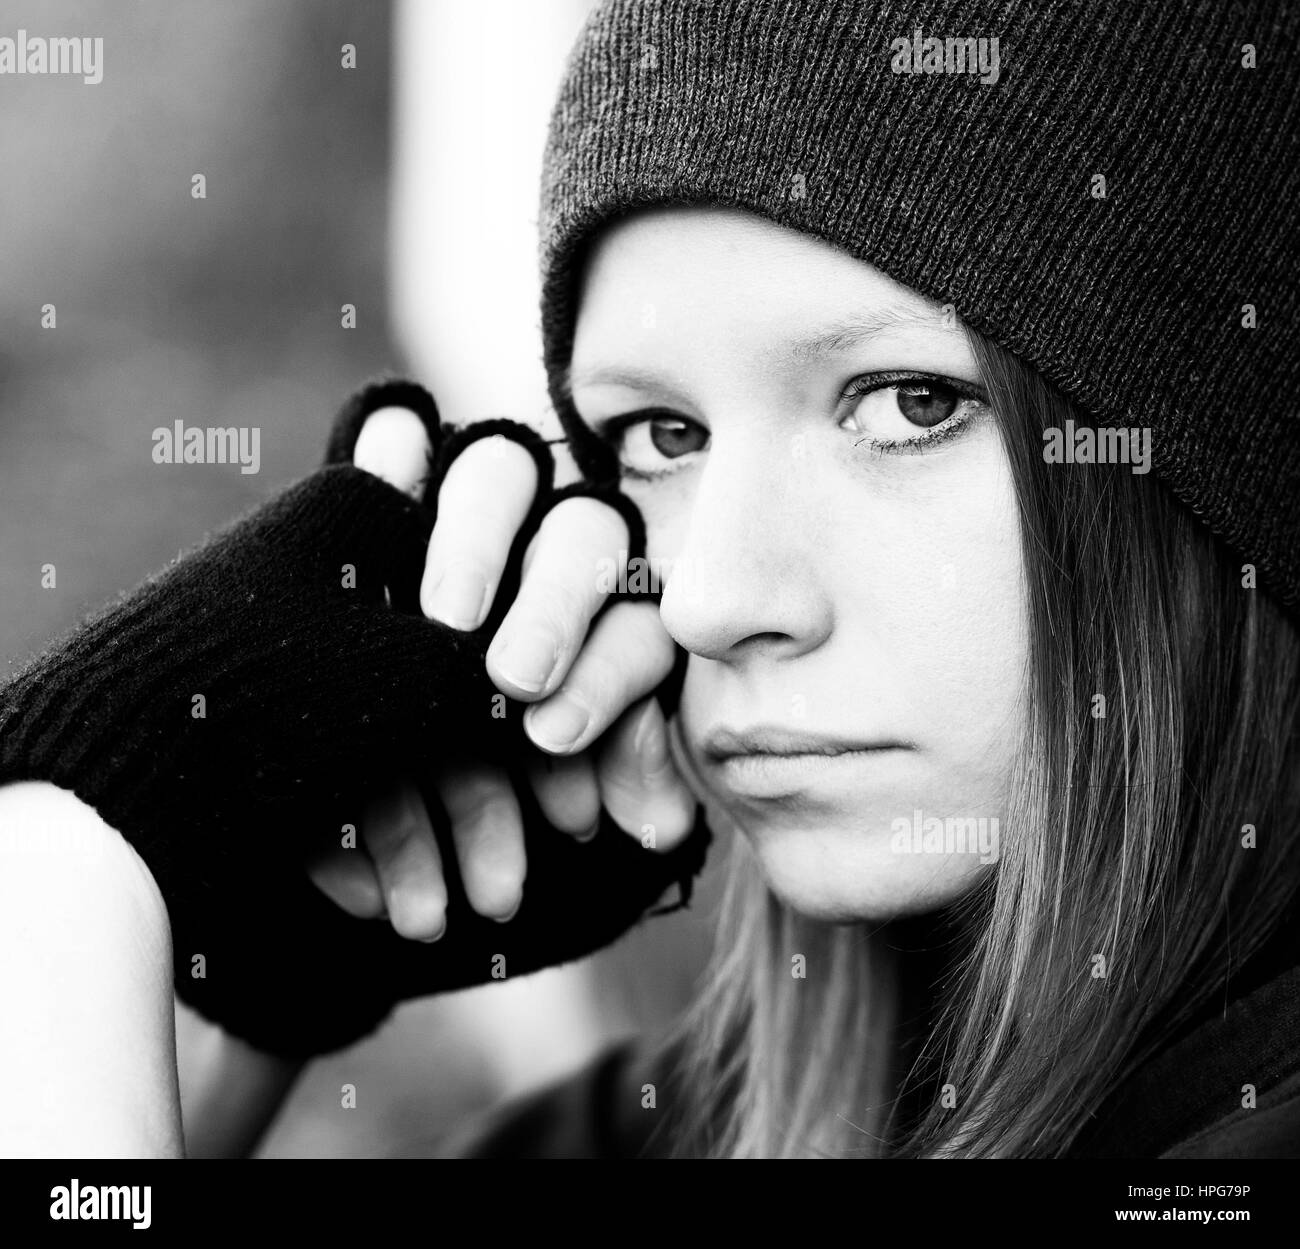 Sad depressed teen girl concept Stock Photo